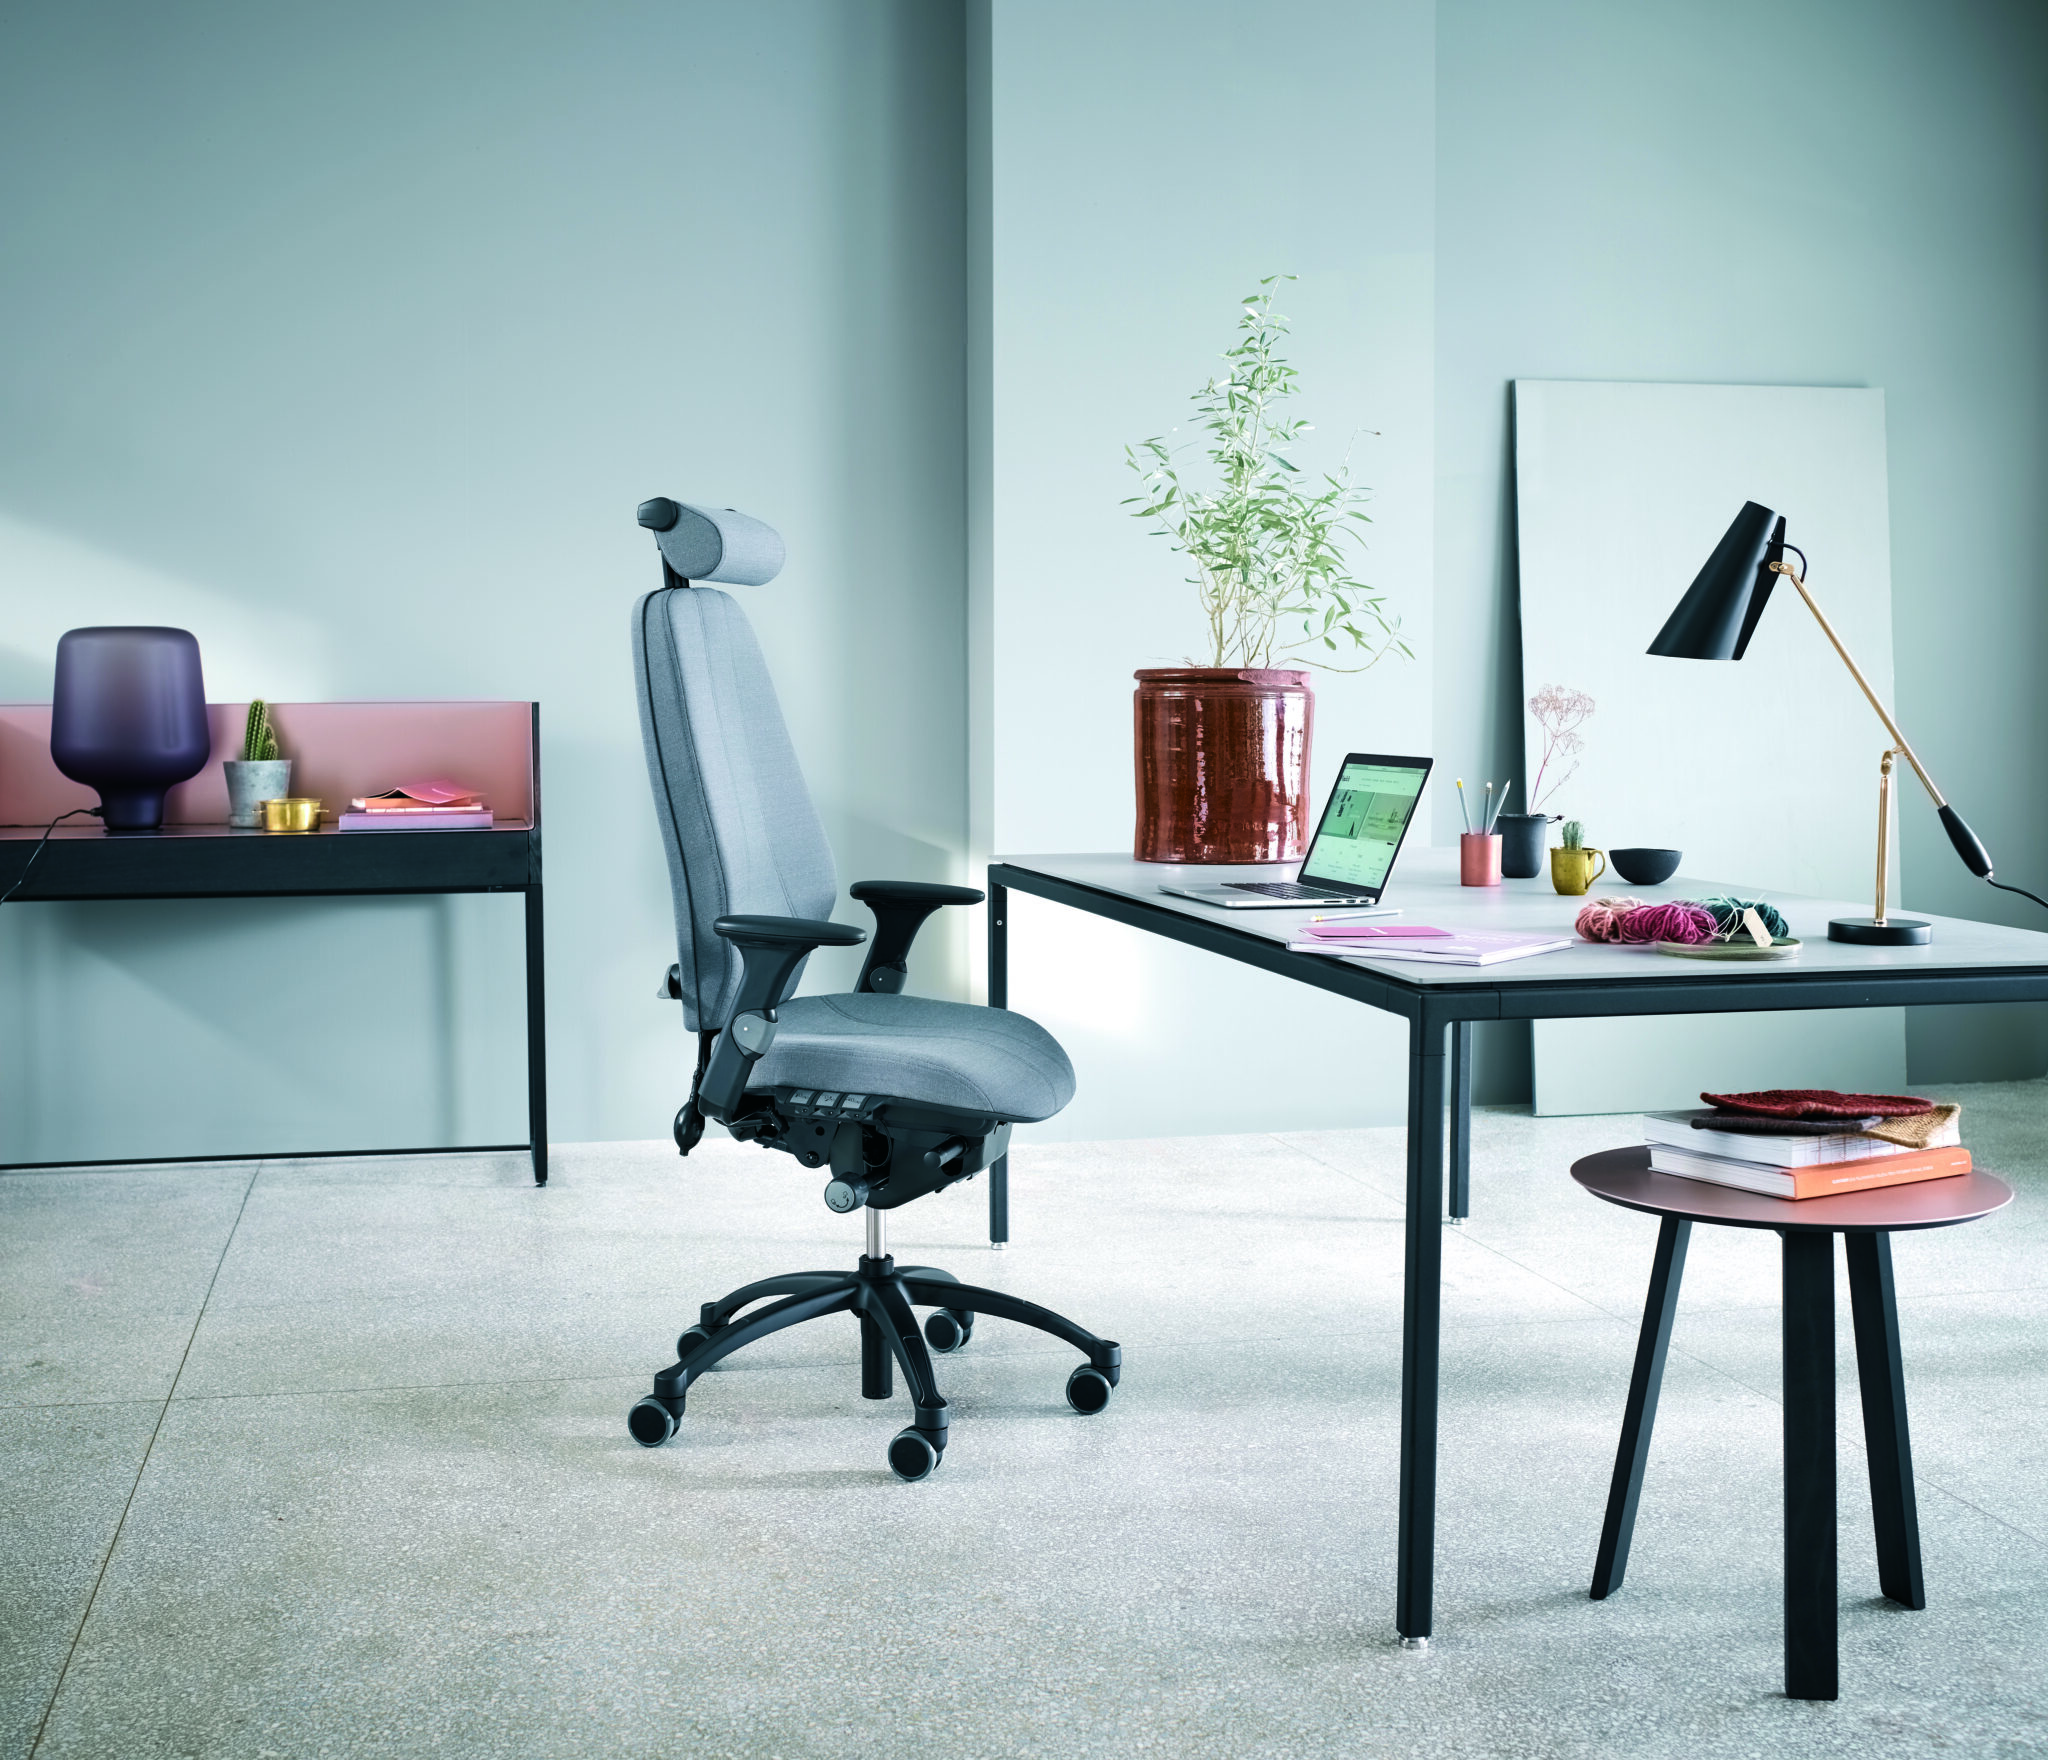 HAG kantoormeubilair ergonomie werkplek Den Haag Heering Office 2